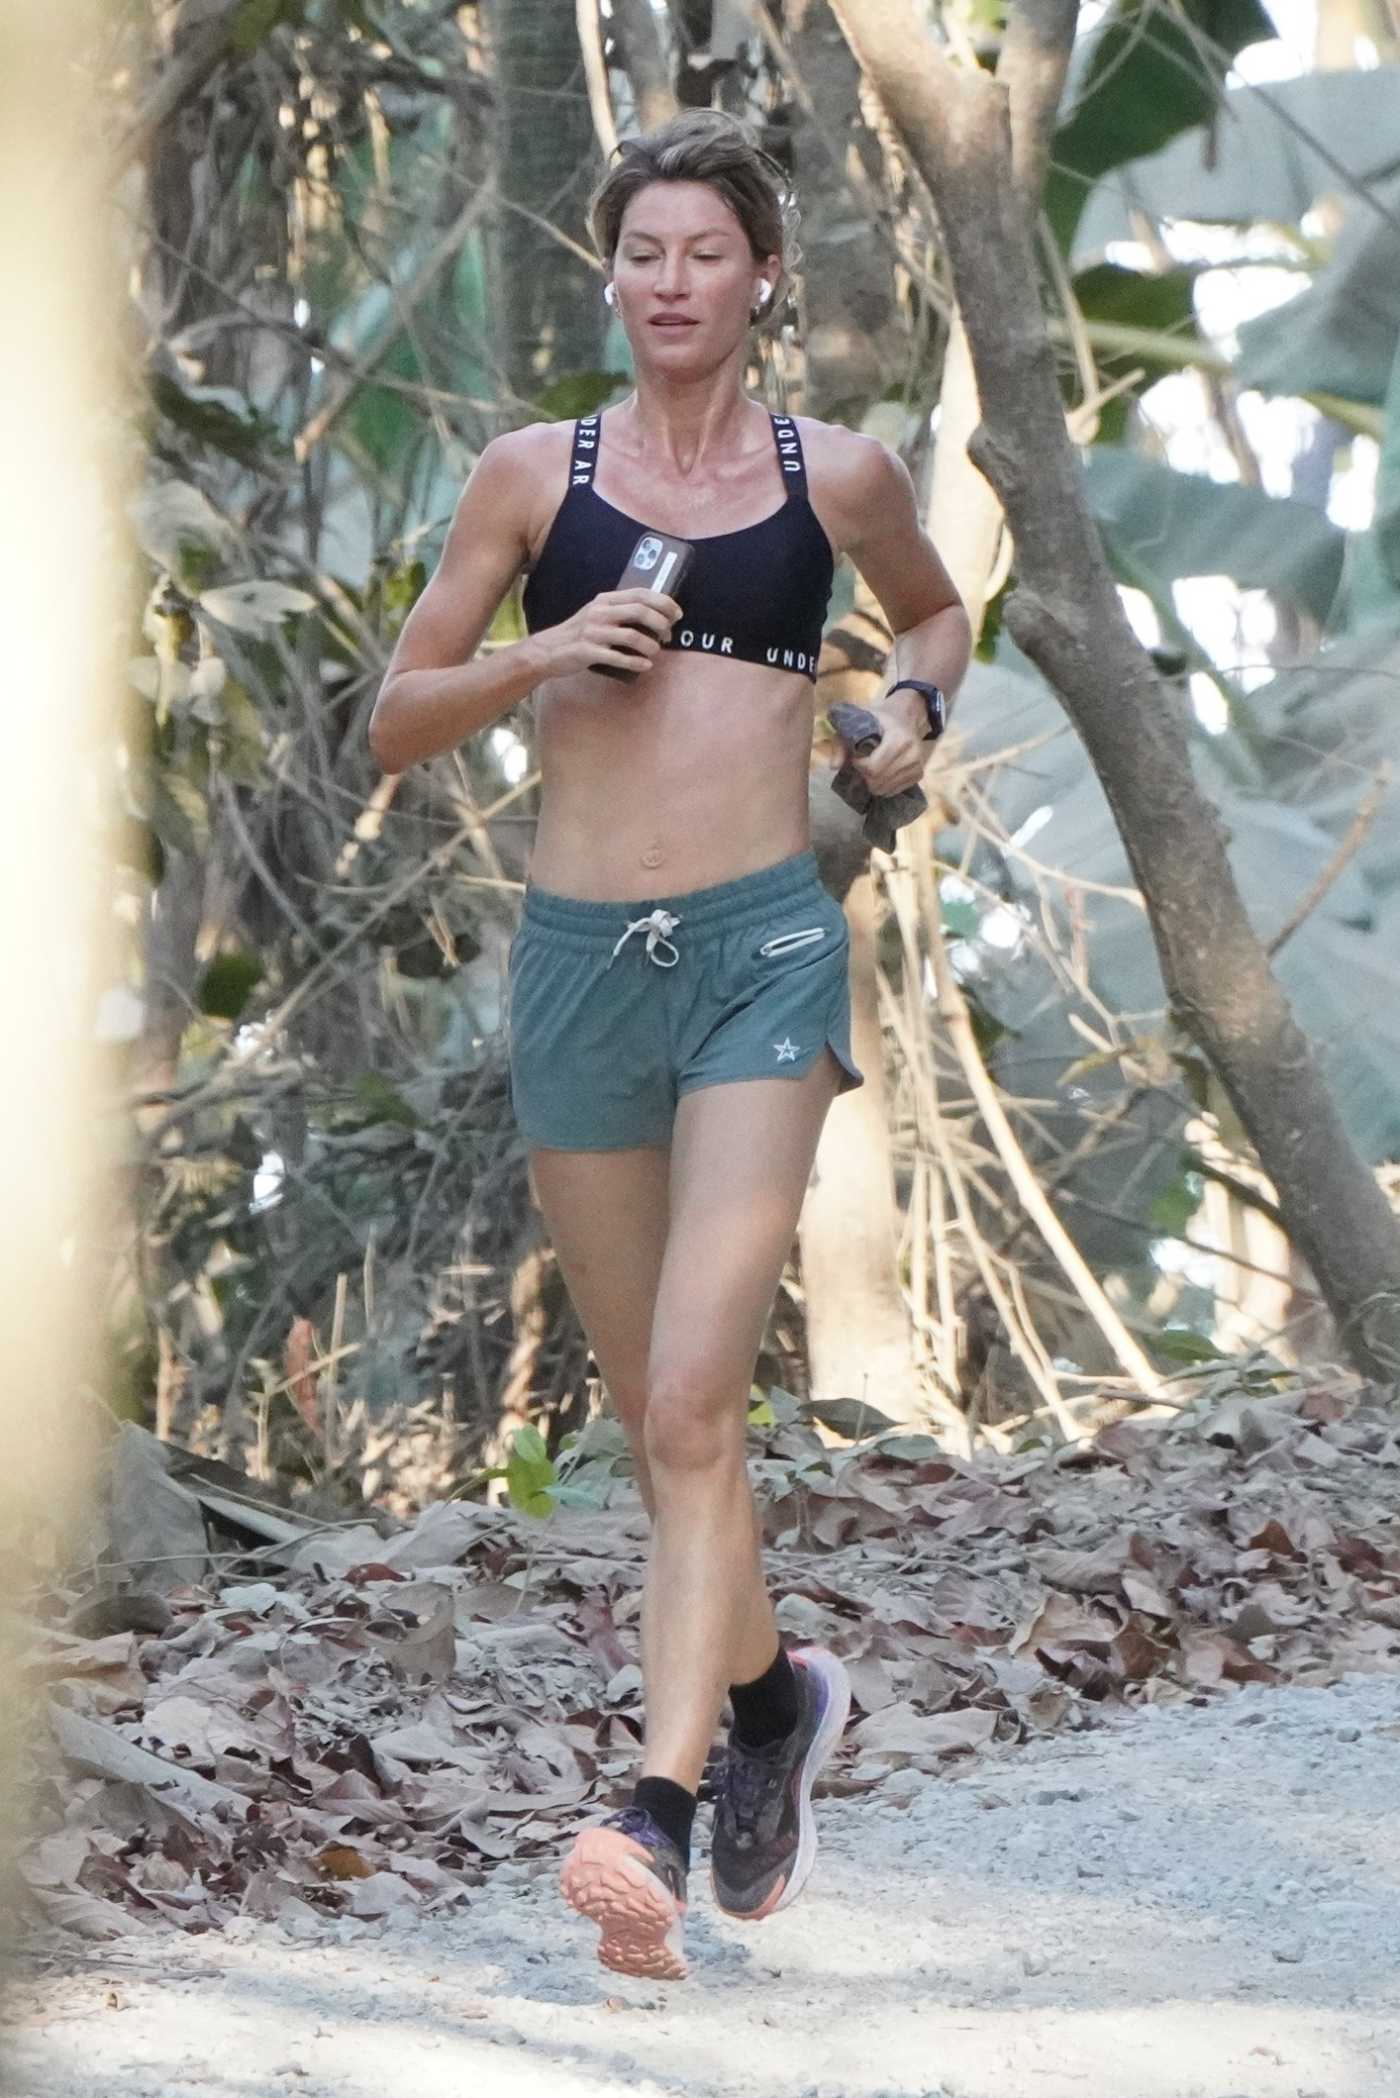 Gisele Bundchen in a Black Sports Bra Goes for a Run in Costa Rica 02/18/2022